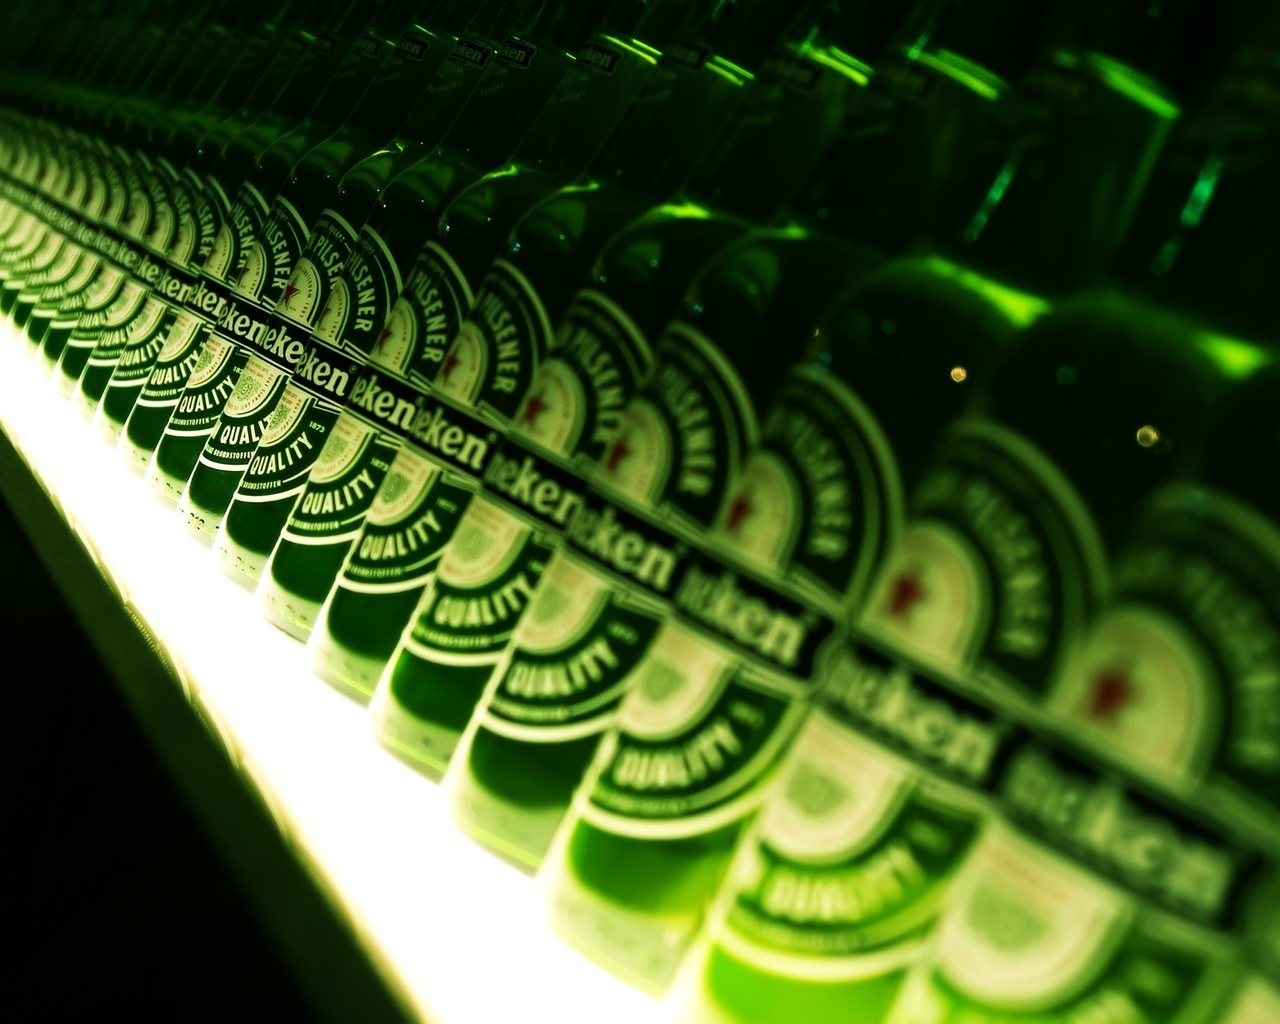 Heineken Anyone for 1280 x 1024 resolution